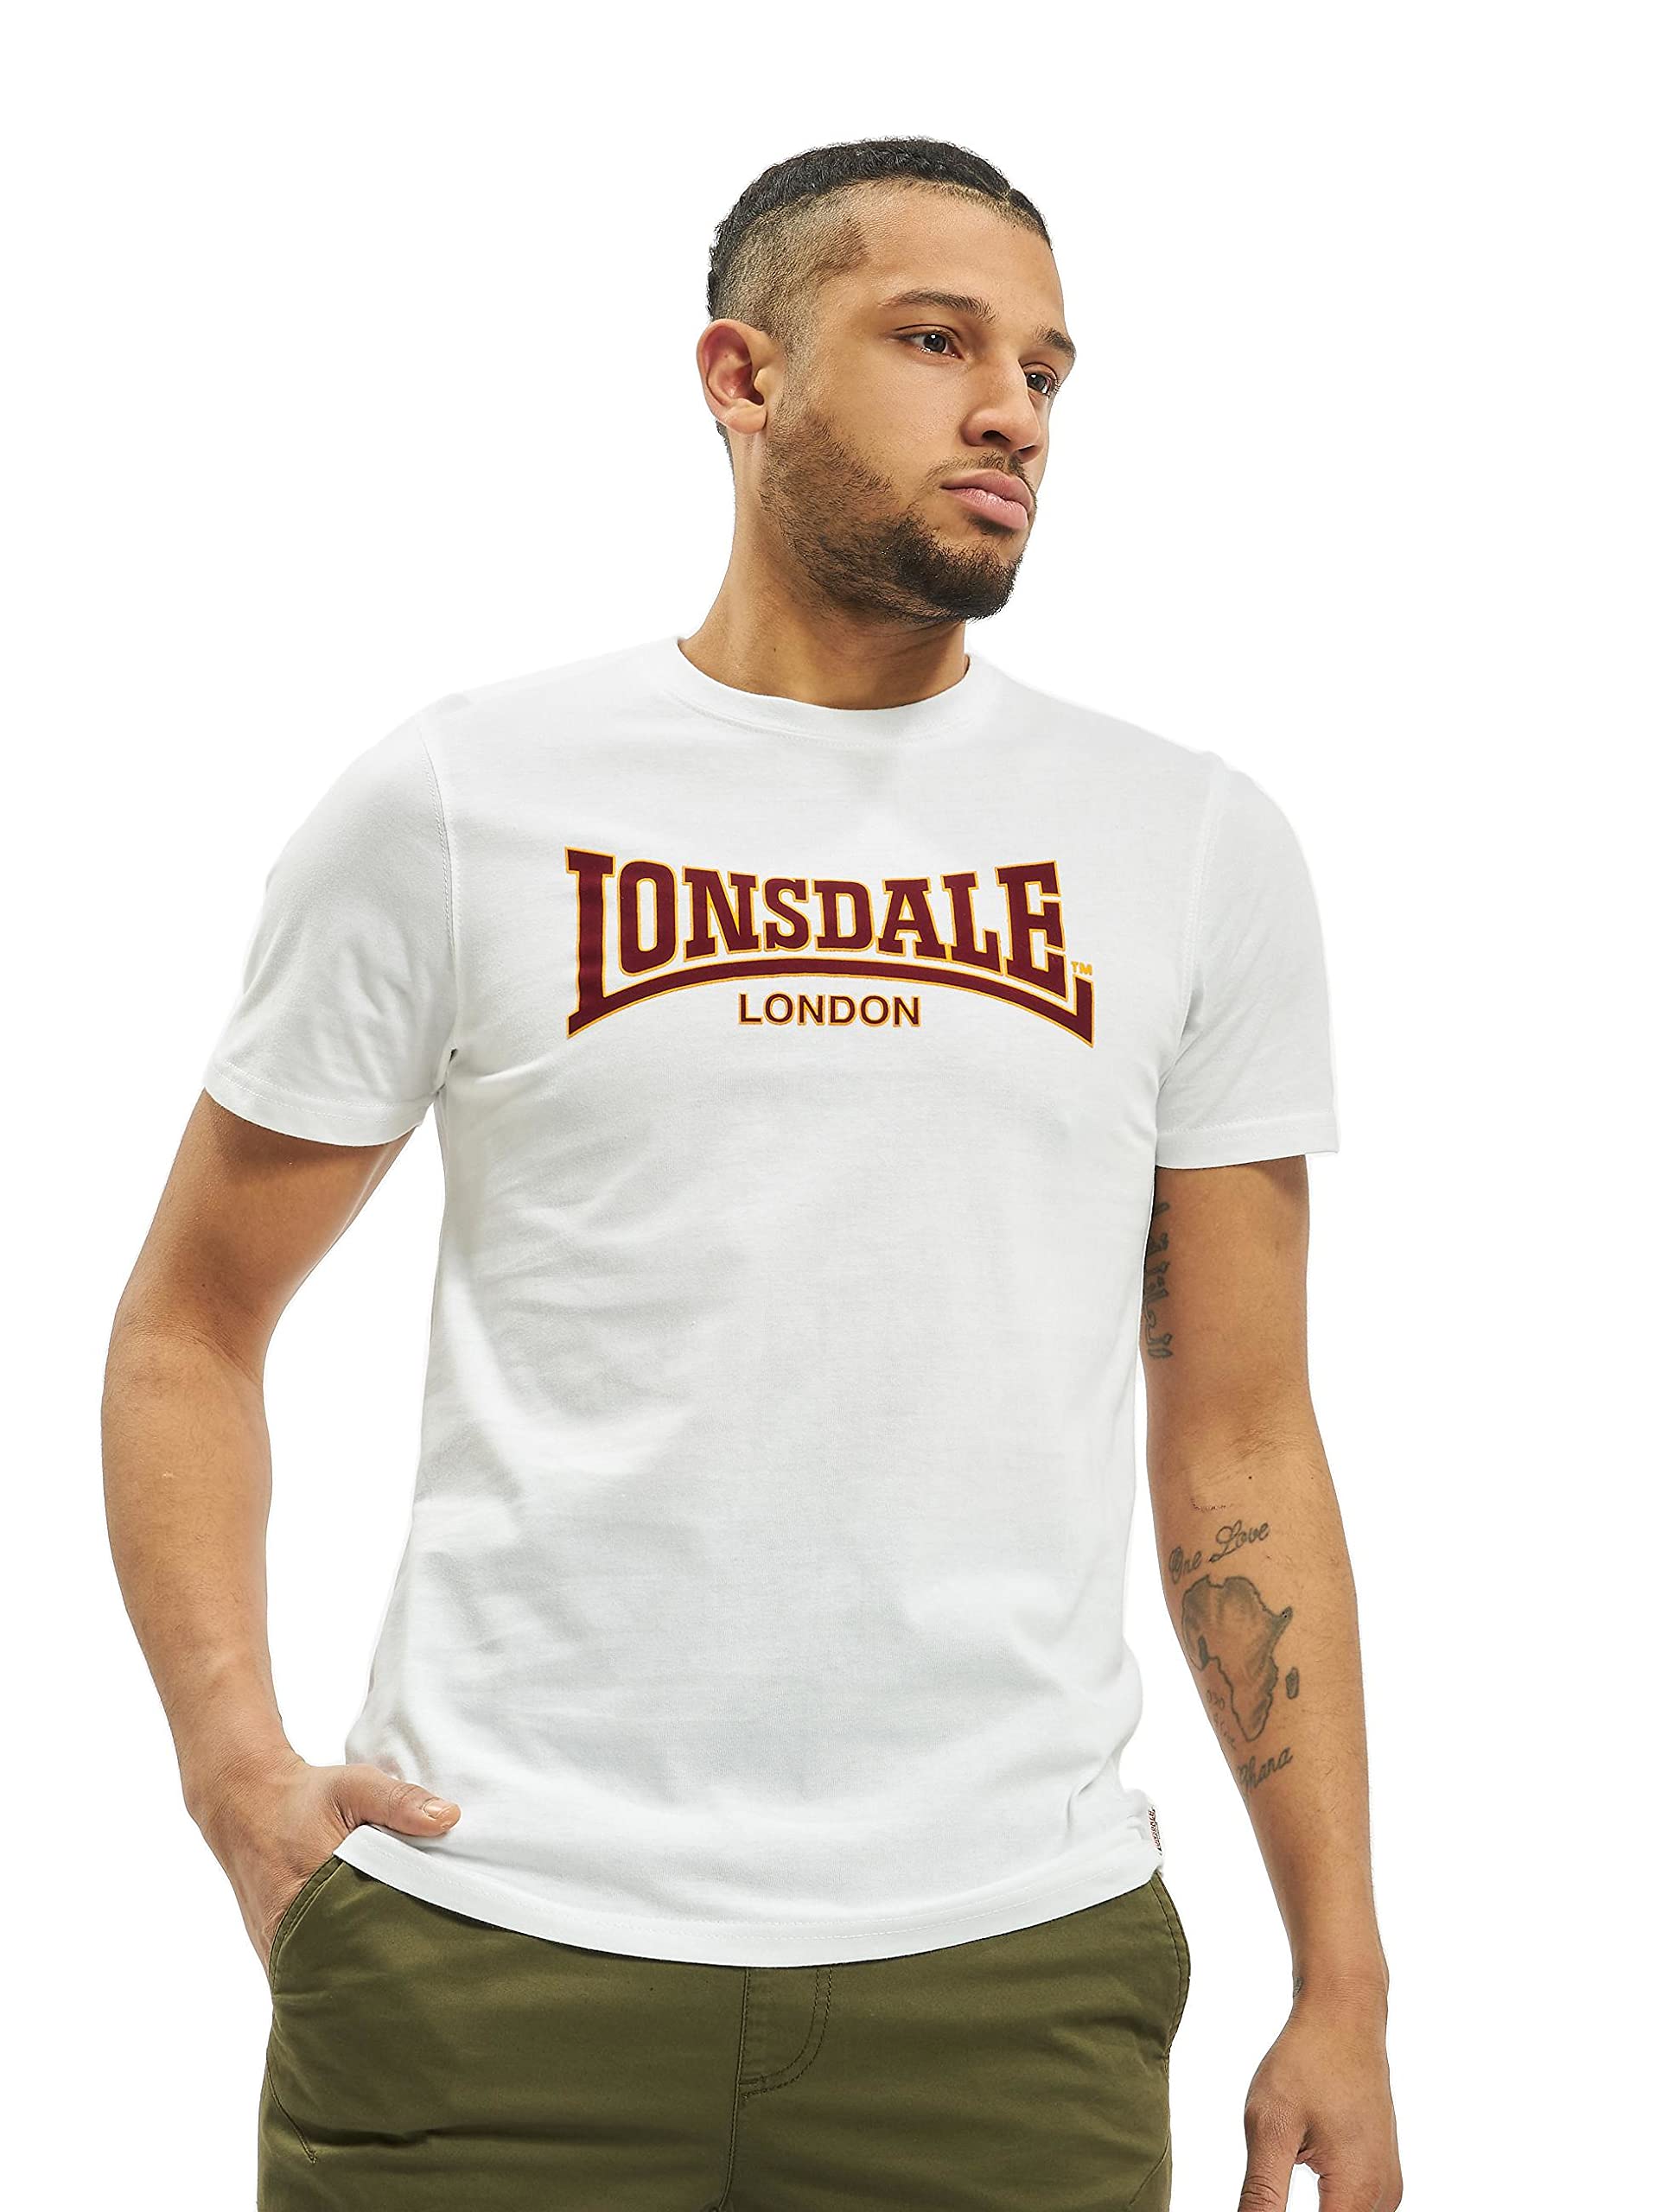 Lonsdale Herren T-shirt Classic Slimfit Langarmshirt, Weiß, M EU